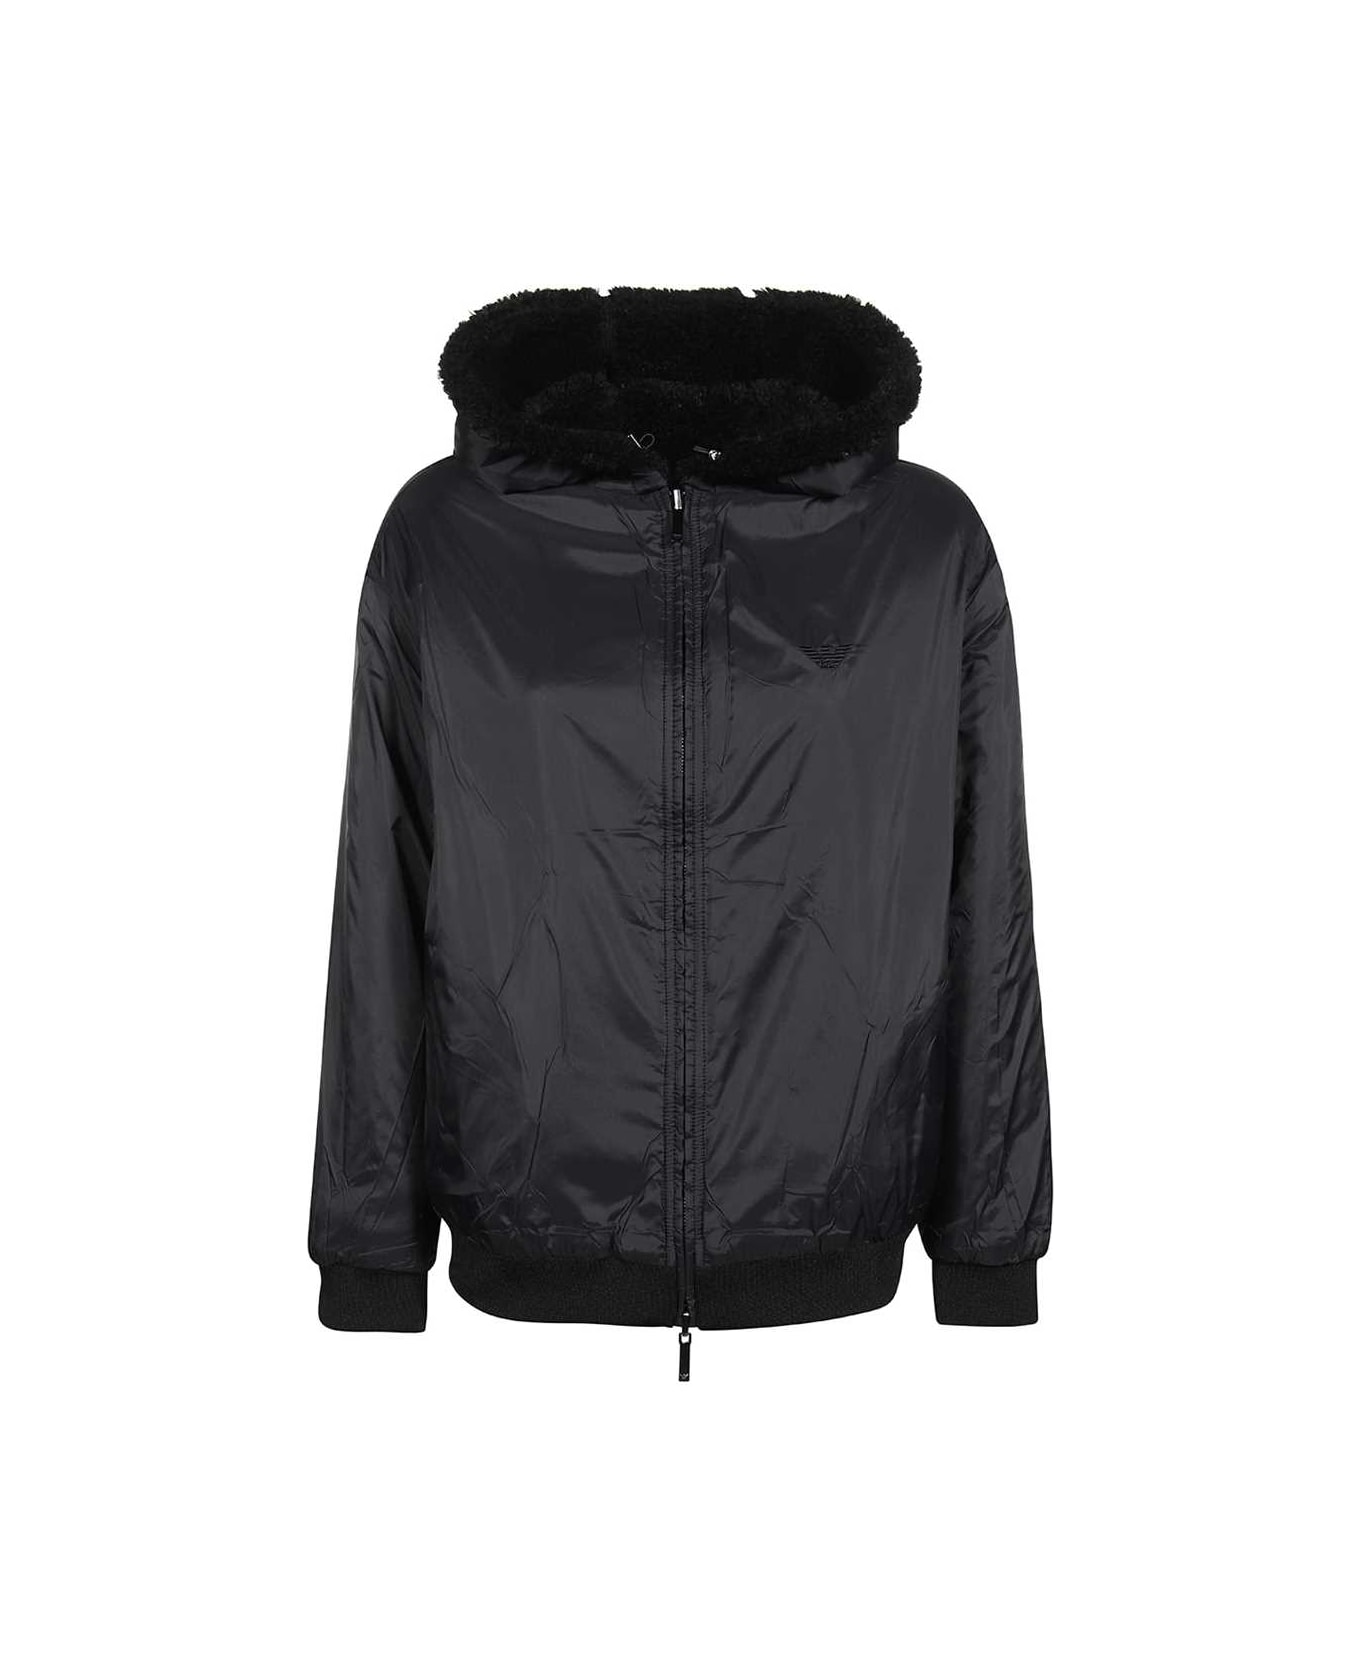 Emporio Armani Reversible Jacket - black ジャケット